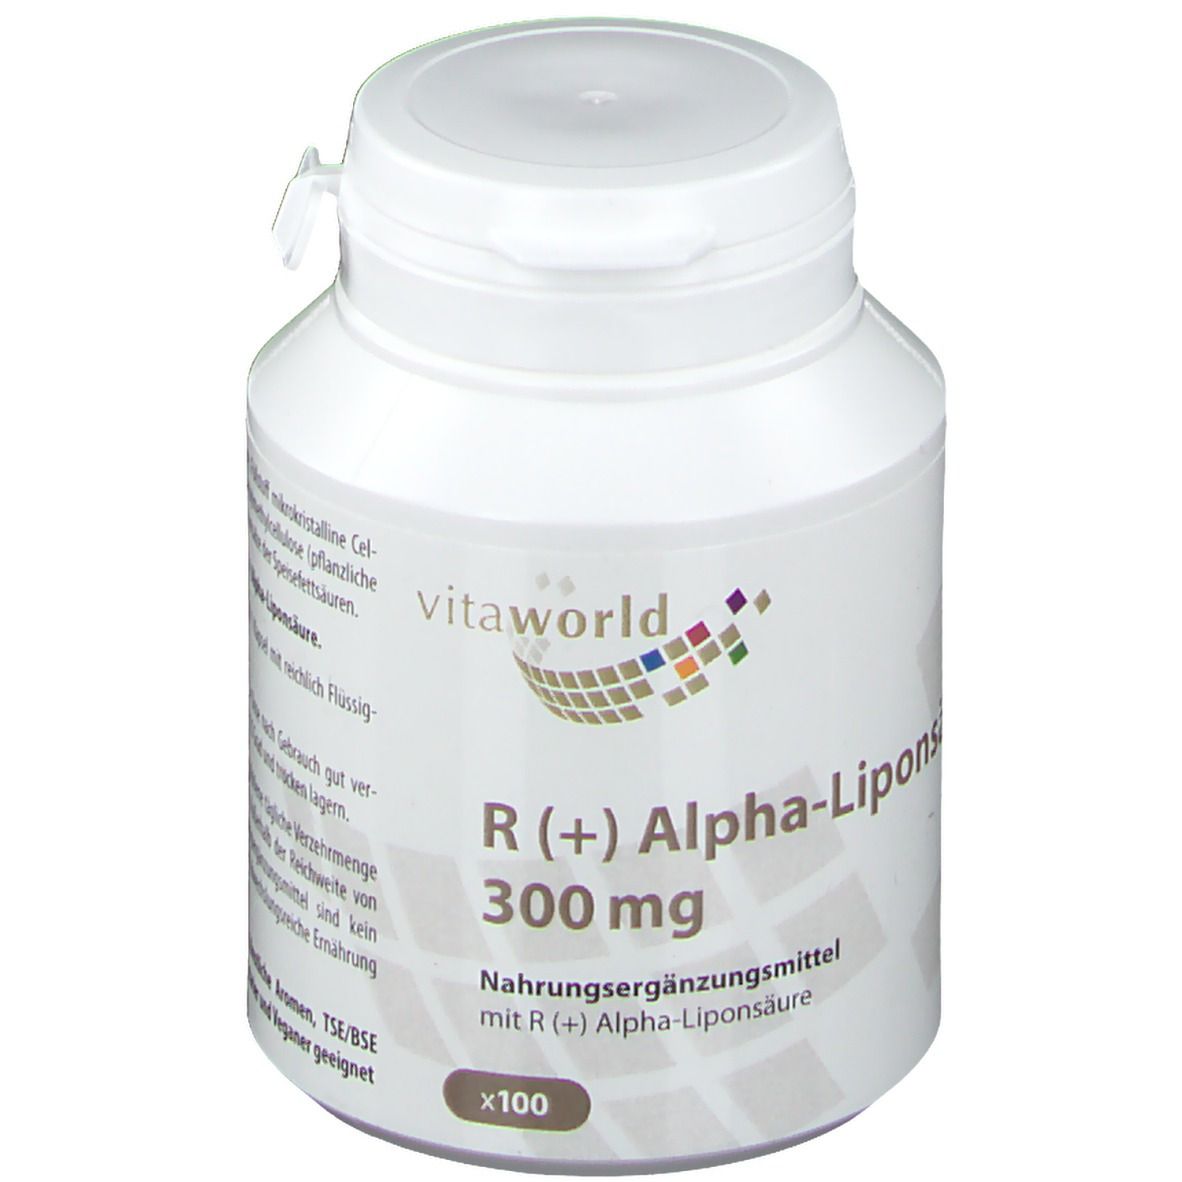 R (+) Alpha-Liponsäure 300 mg